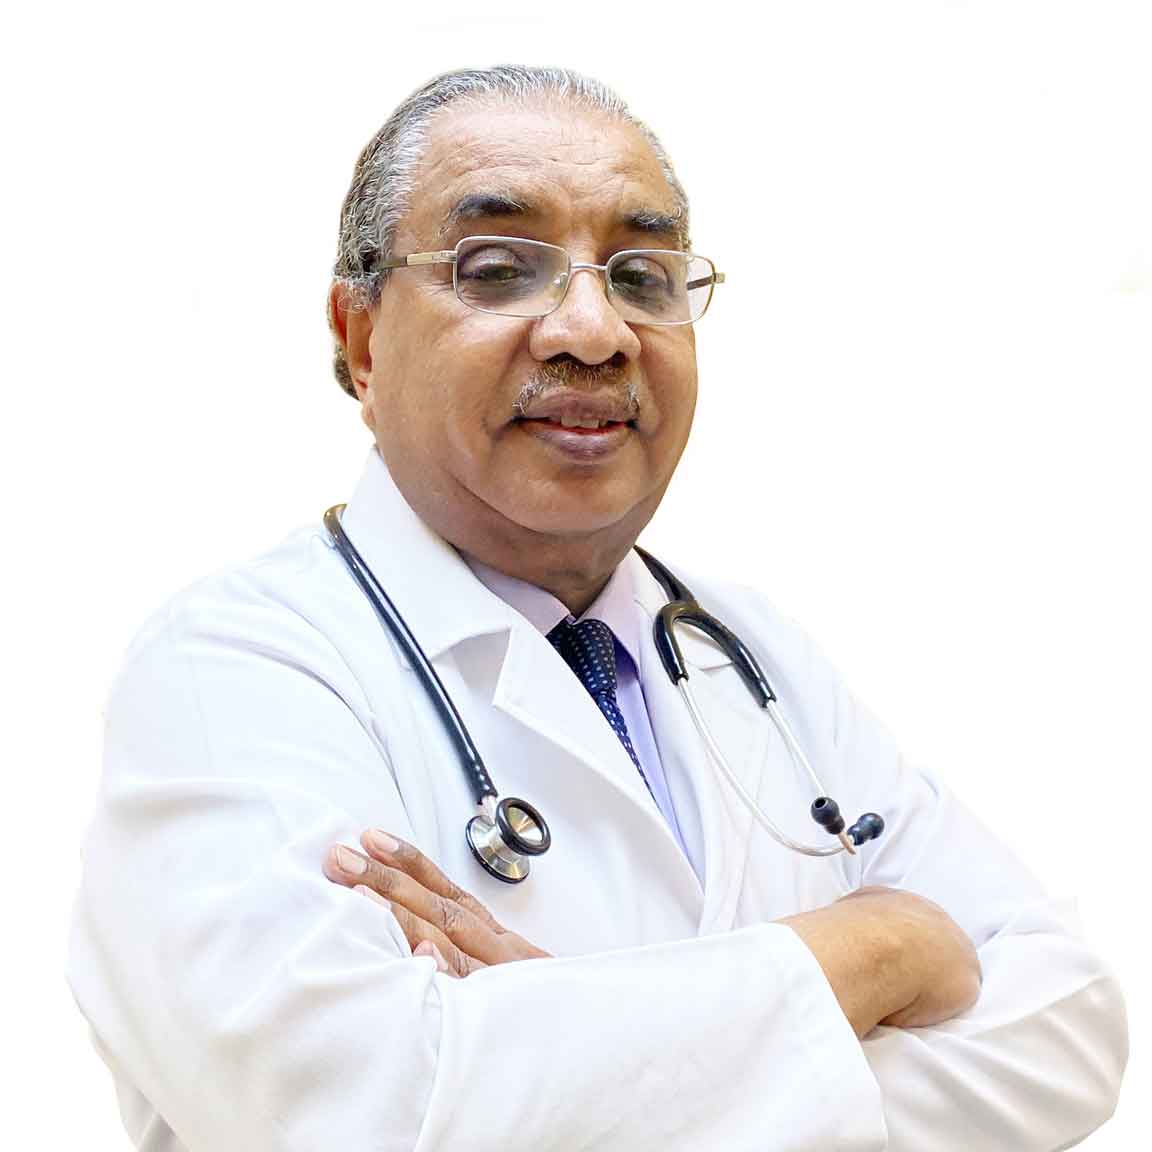 Dr. Osman Mahgoub